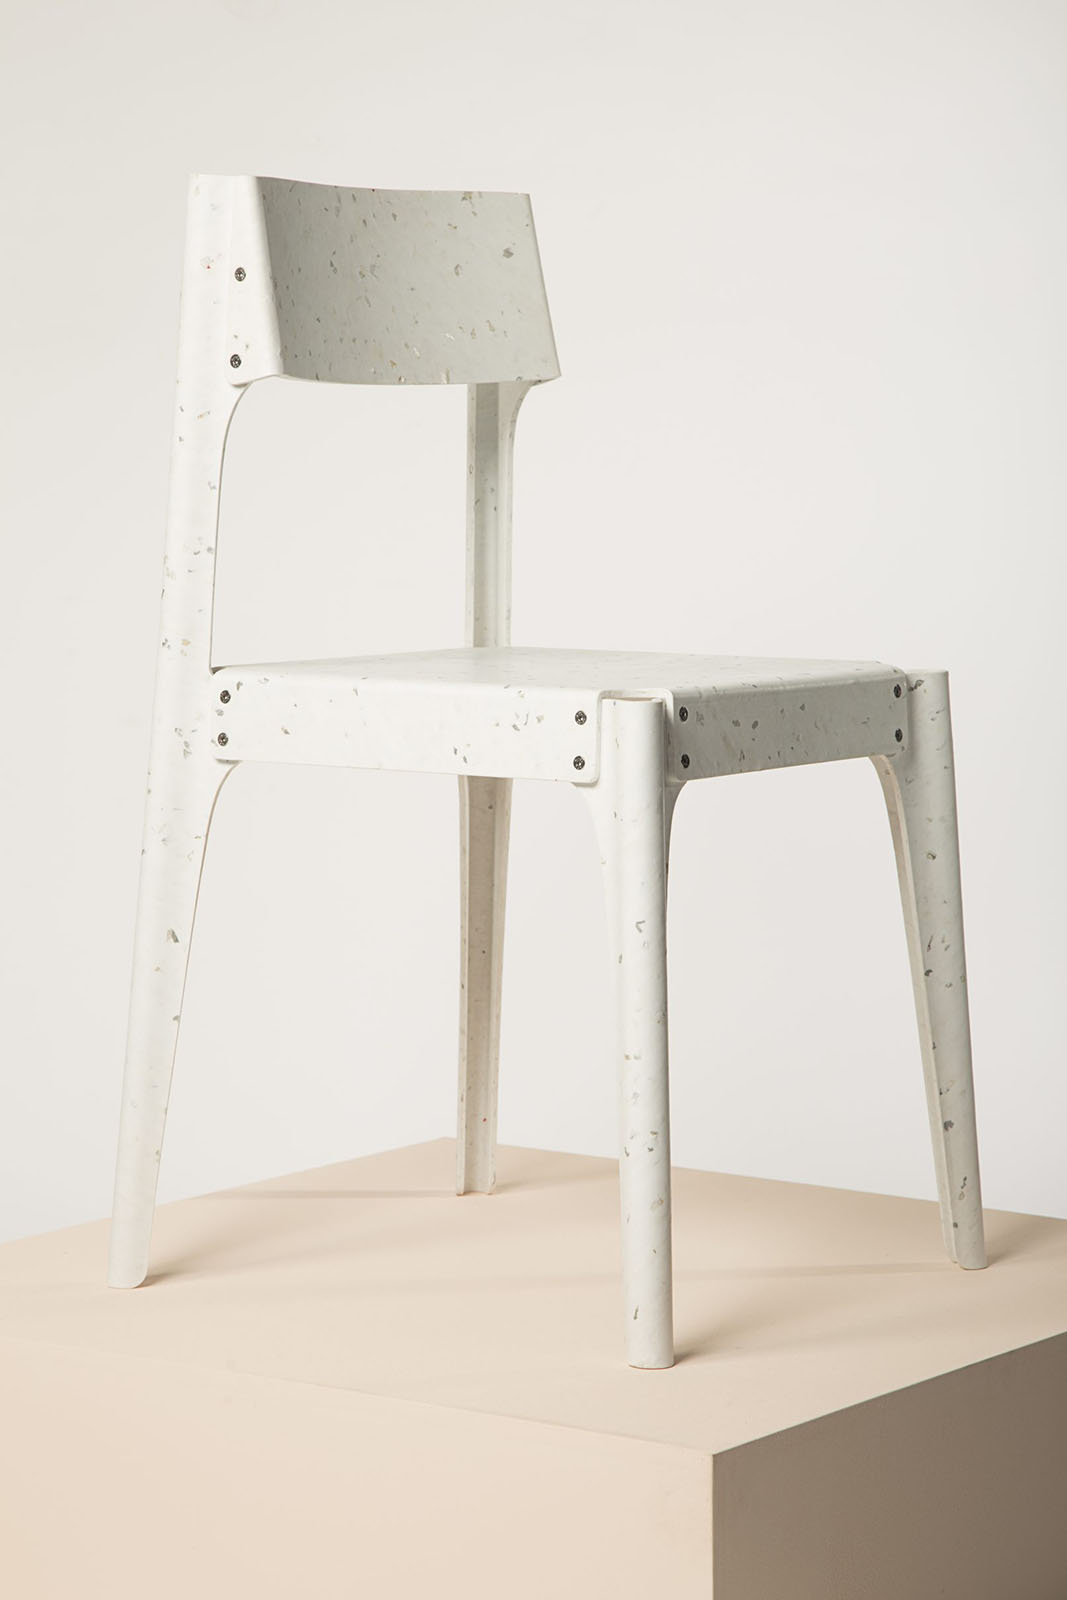 Alba 12mm. Chair detail by Alexander Schul